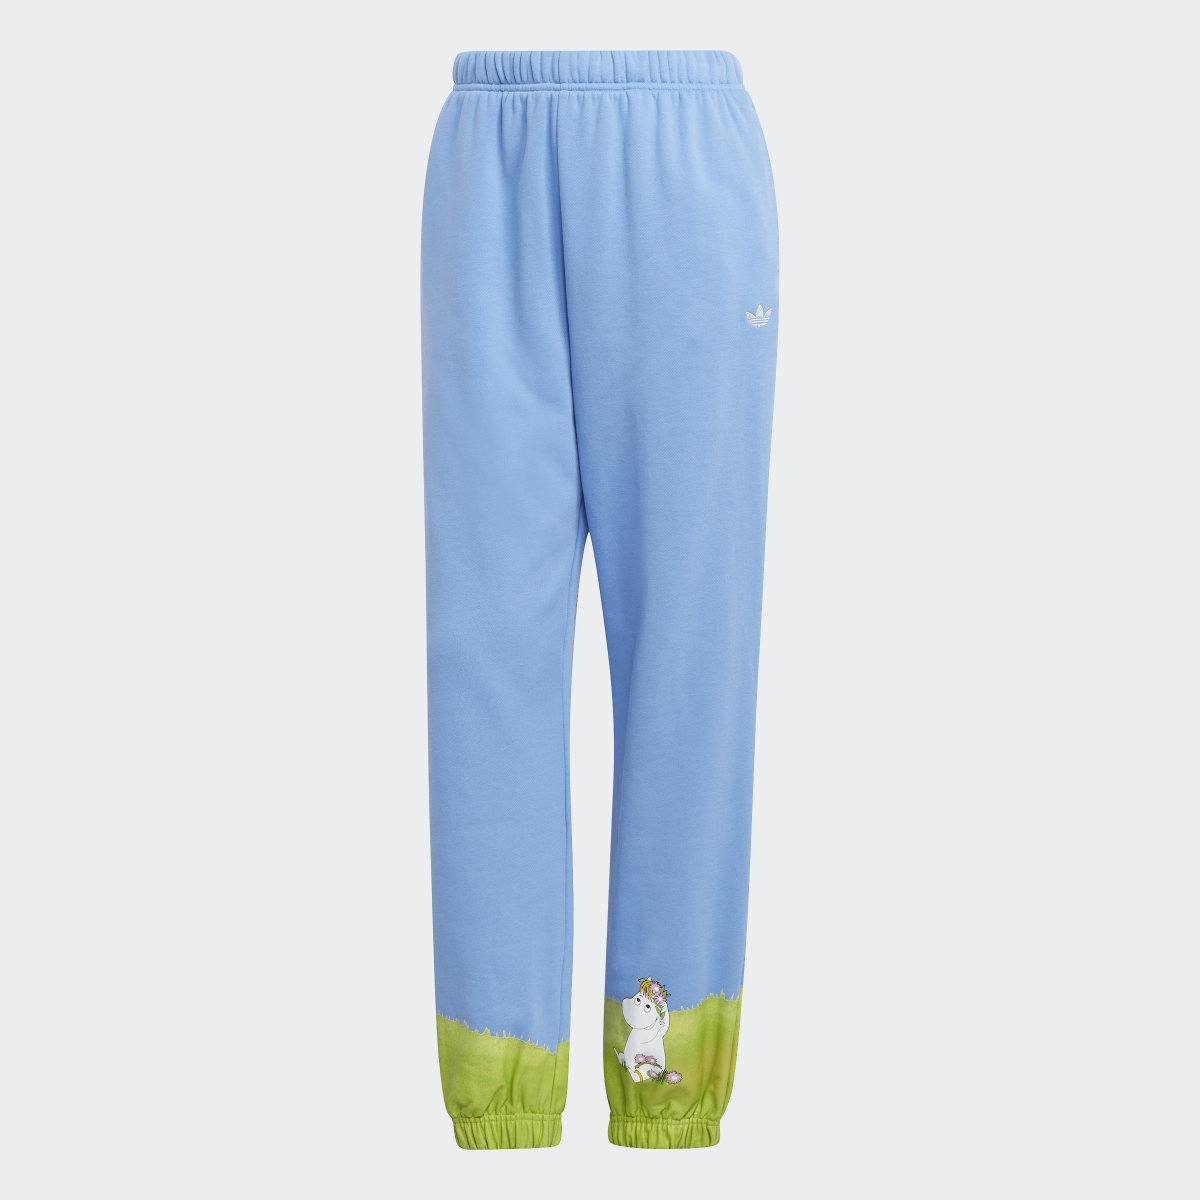 Adidas Originals x Moomin Graphic Sweat Pants. 4